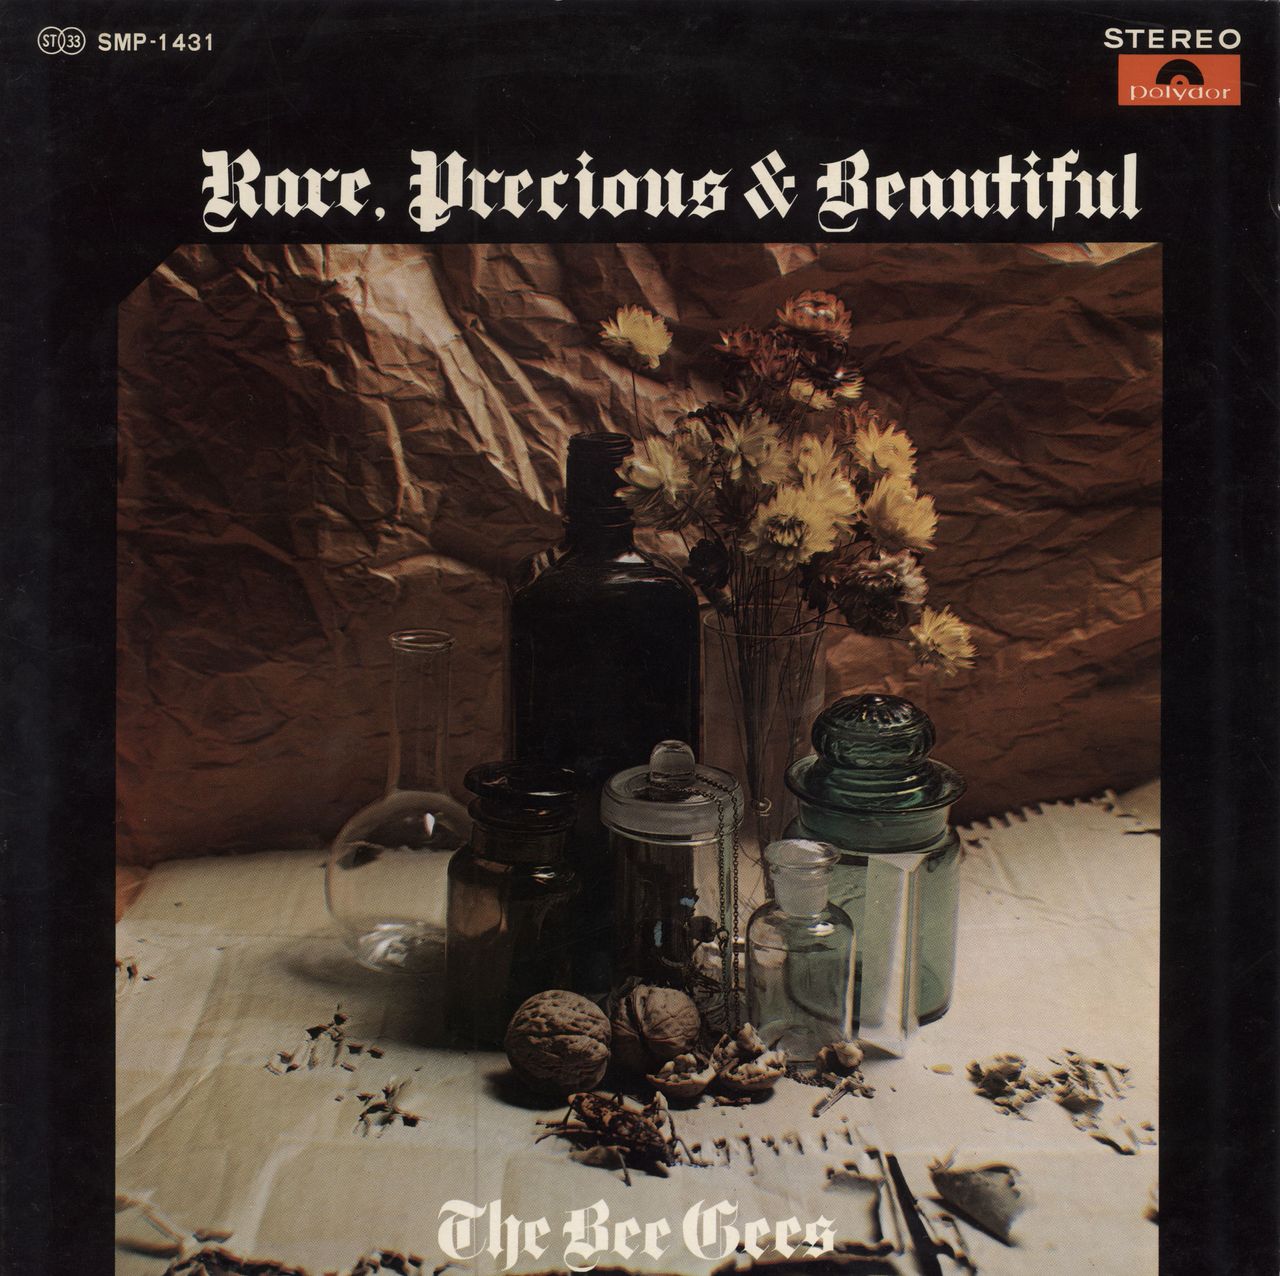 The Bee Gees Rare, Precious & Beautiful Japanese vinyl LP album (LP record) SMP-1431